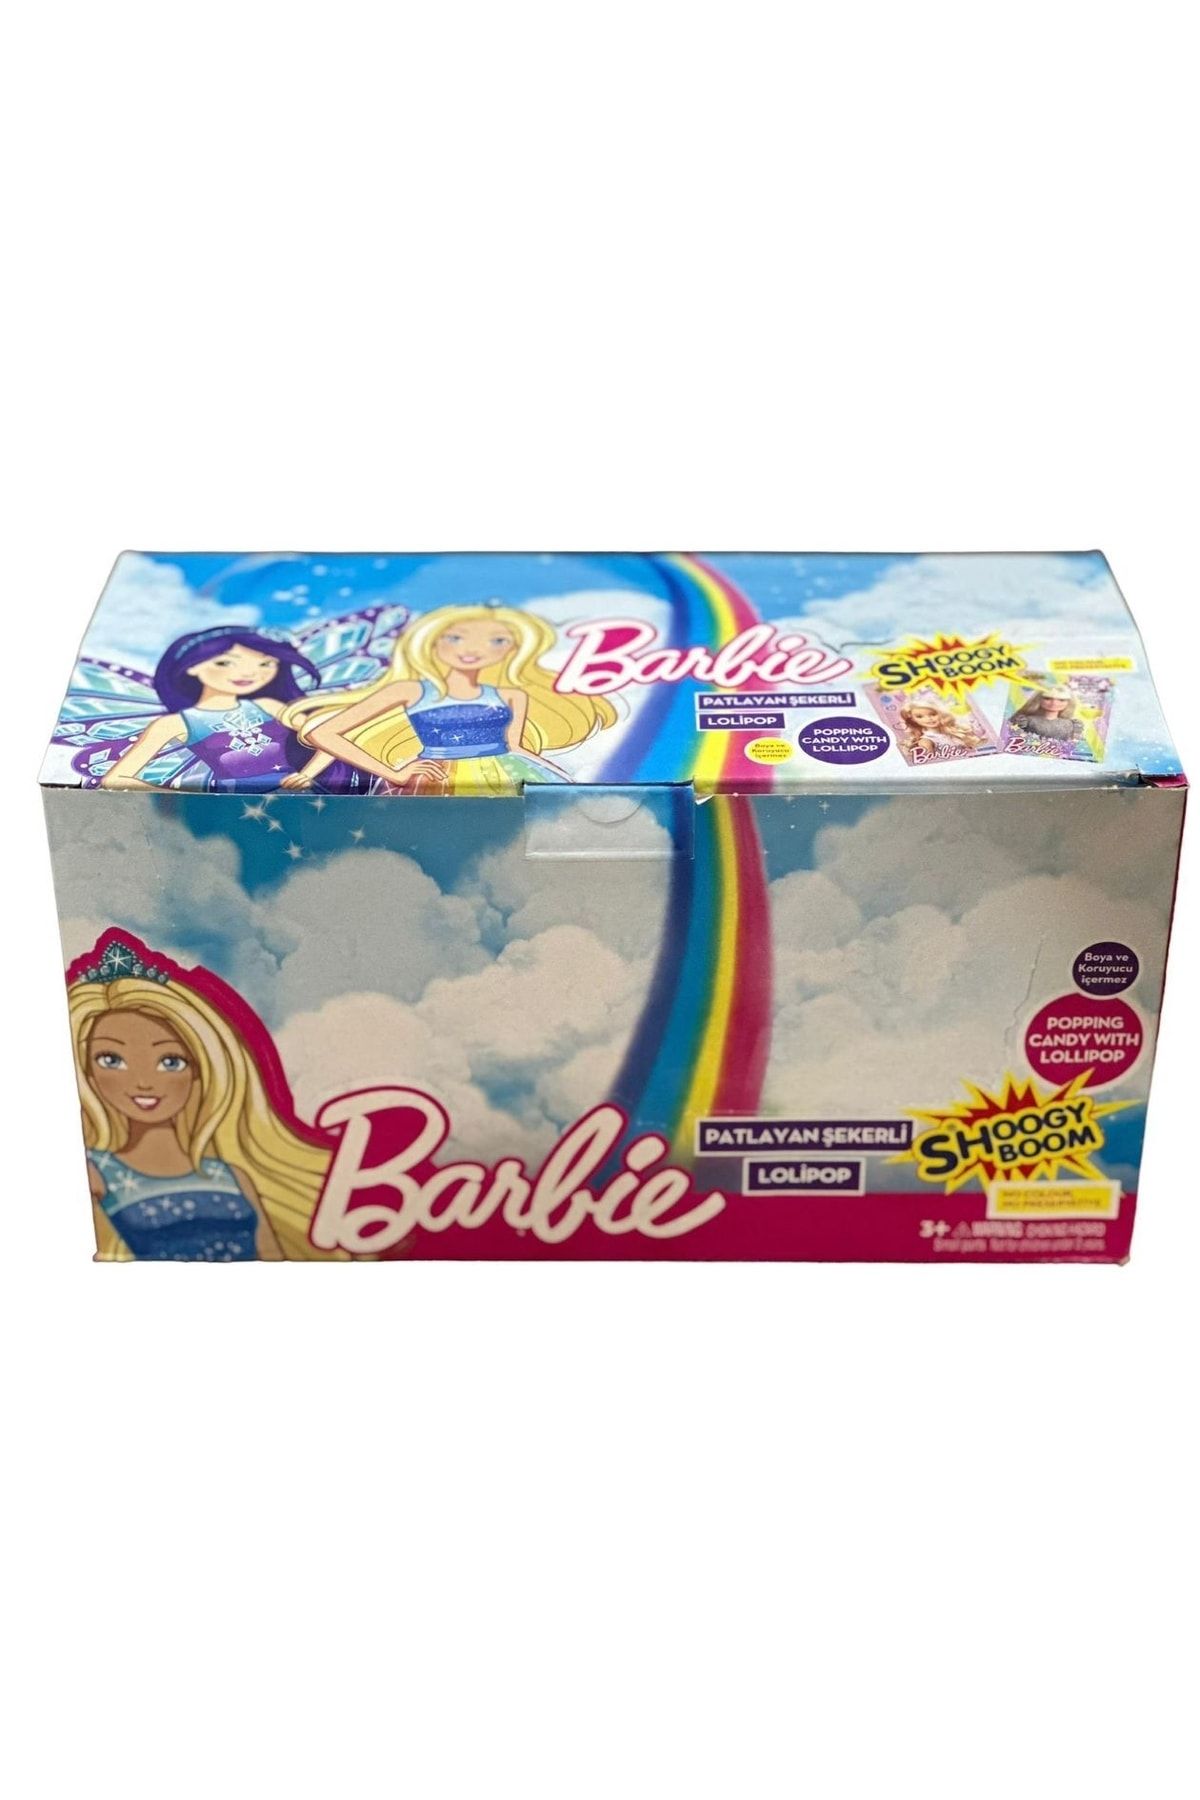 Barbie Hleks Patlayan Şekerli Lolipop Çilek 12 Gr 36'lı